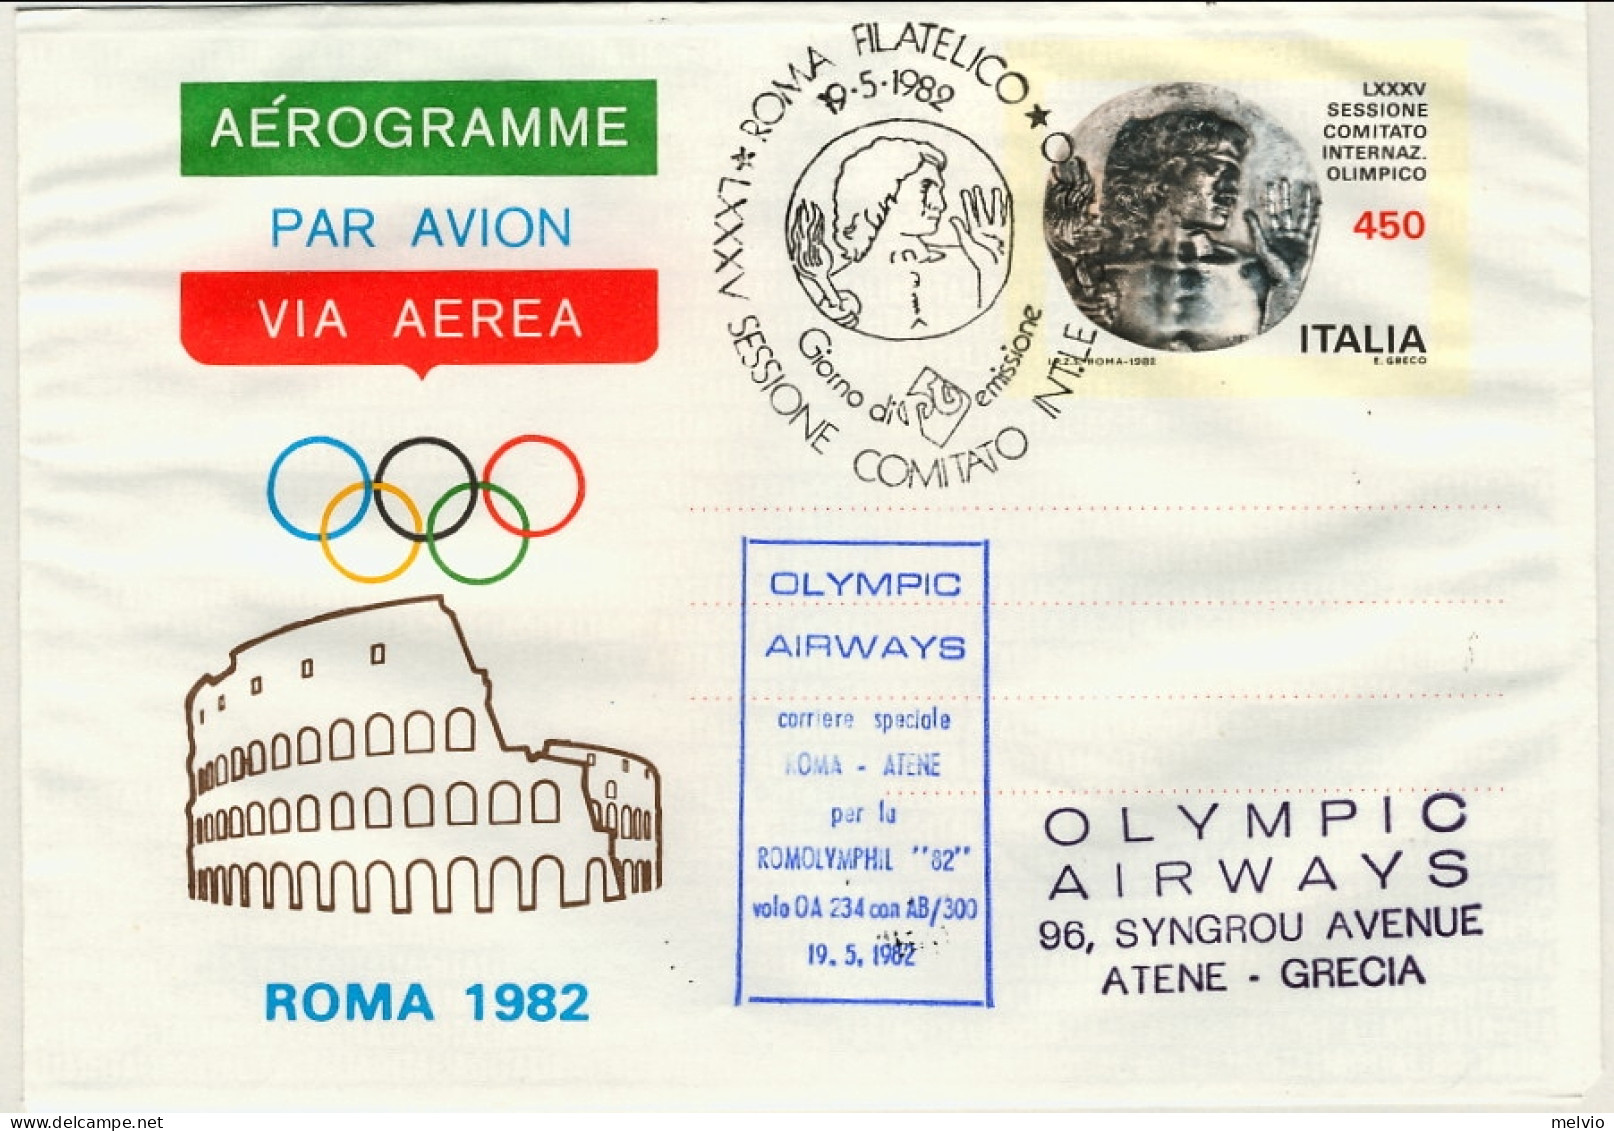 1982-L.450 LXXXV Sessione Comitato Internaz.olimpico Bollo Olympic Airways Roma  - 1981-90: Marcophilie